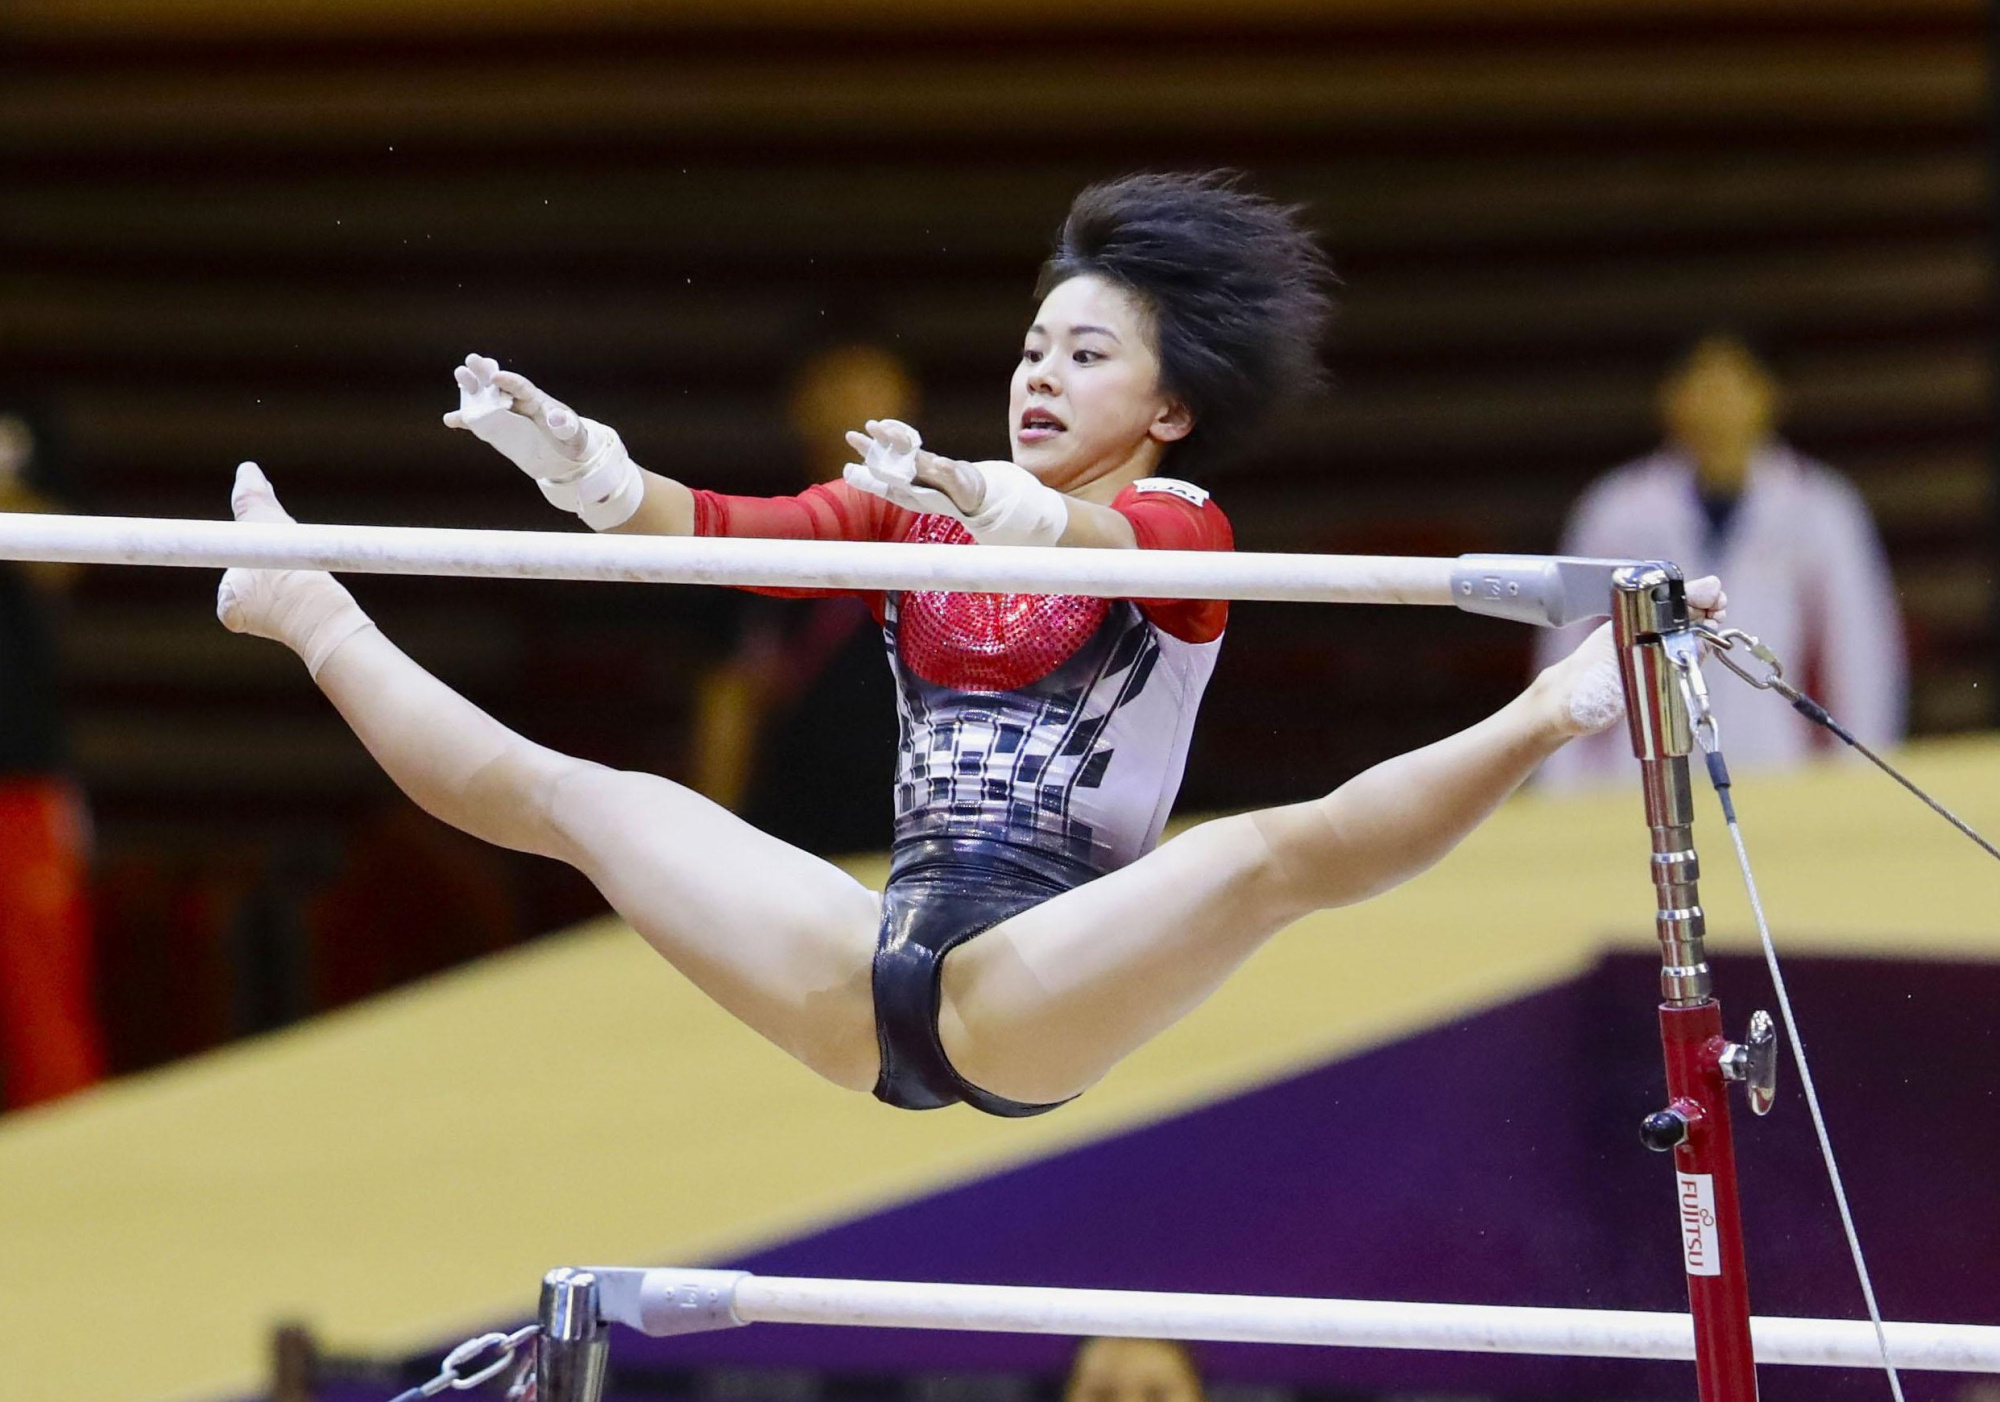 Uneven Bars: Female gymnasts, Japanese representative, Olympic medalist Mai Murakami. 2000x1410 HD Wallpaper.